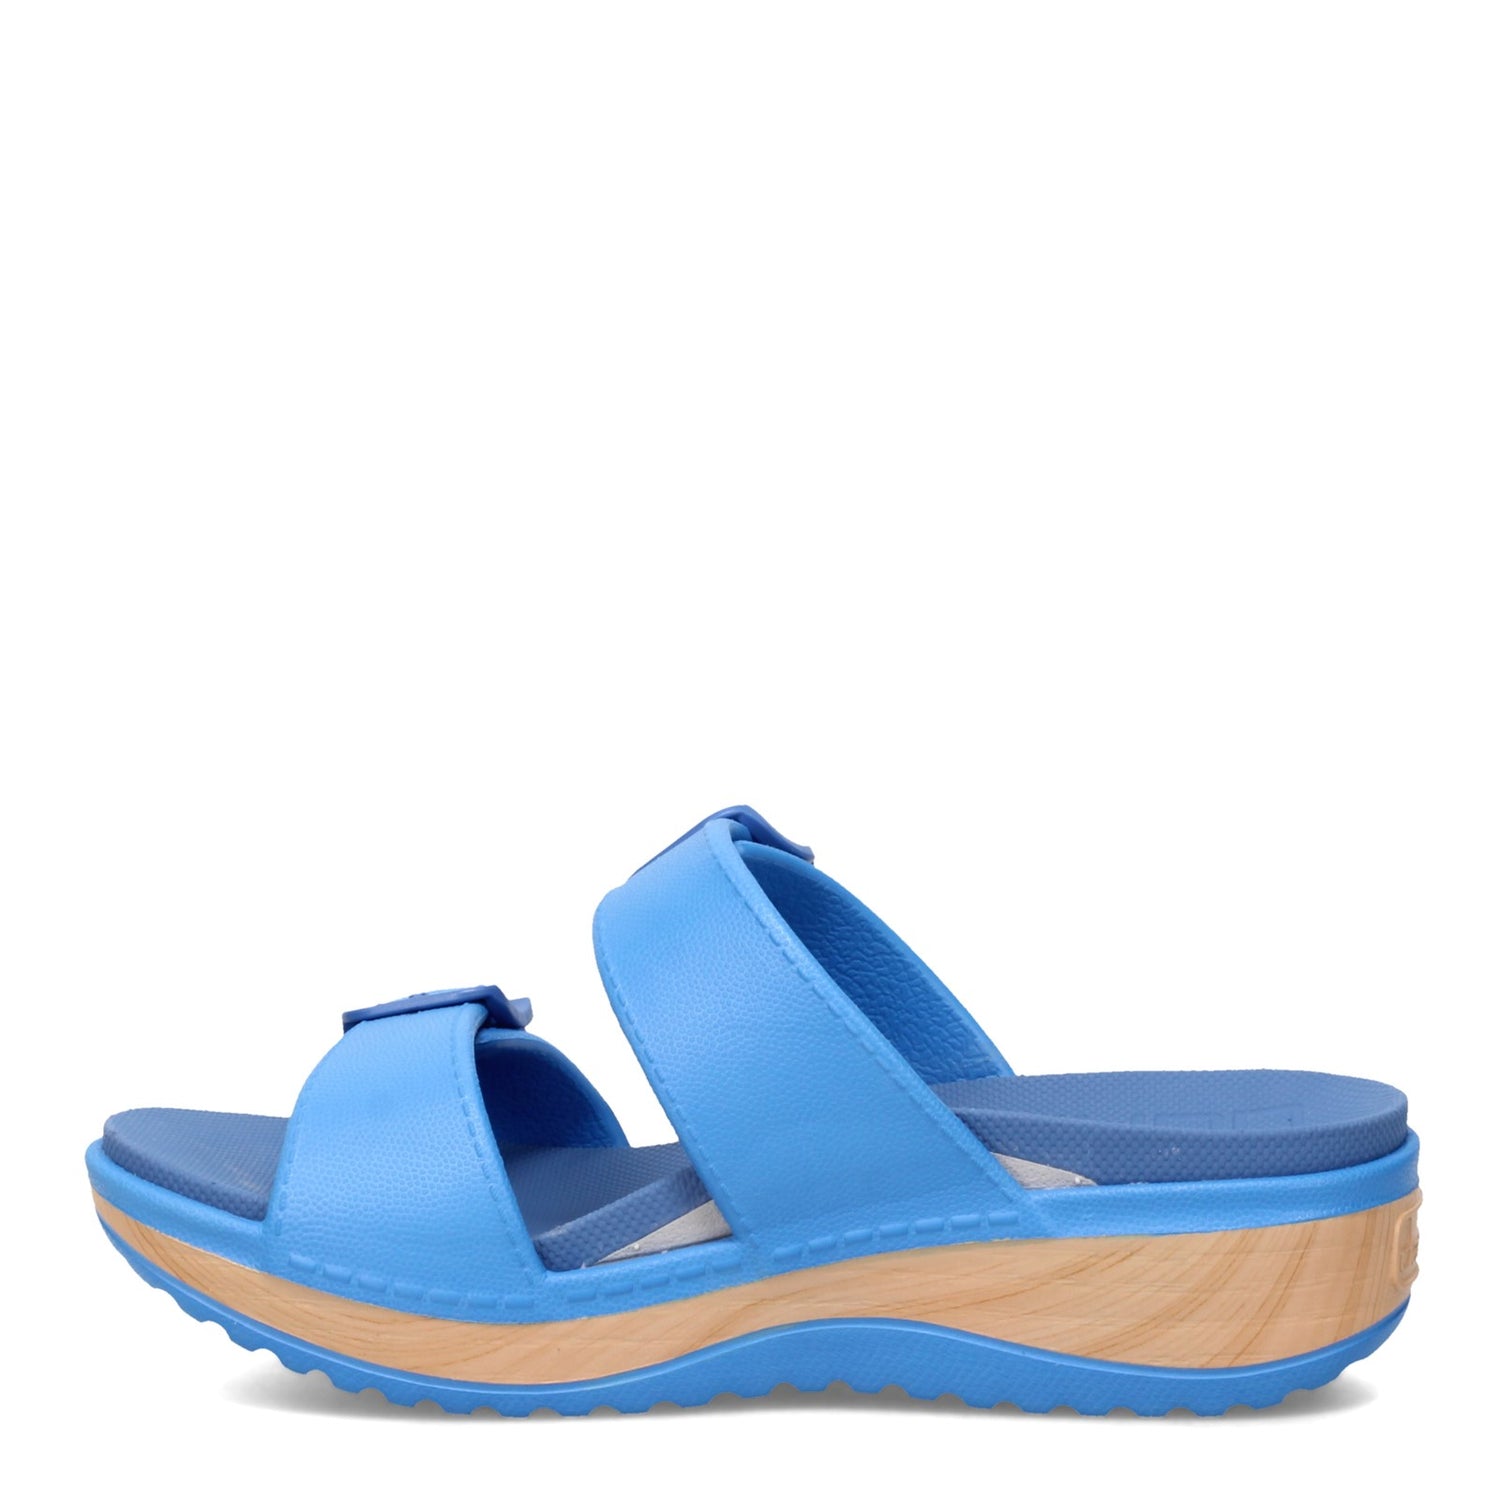 Peltz Shoes  Women's Dansko Kandi Sandal Blue 4520-050500